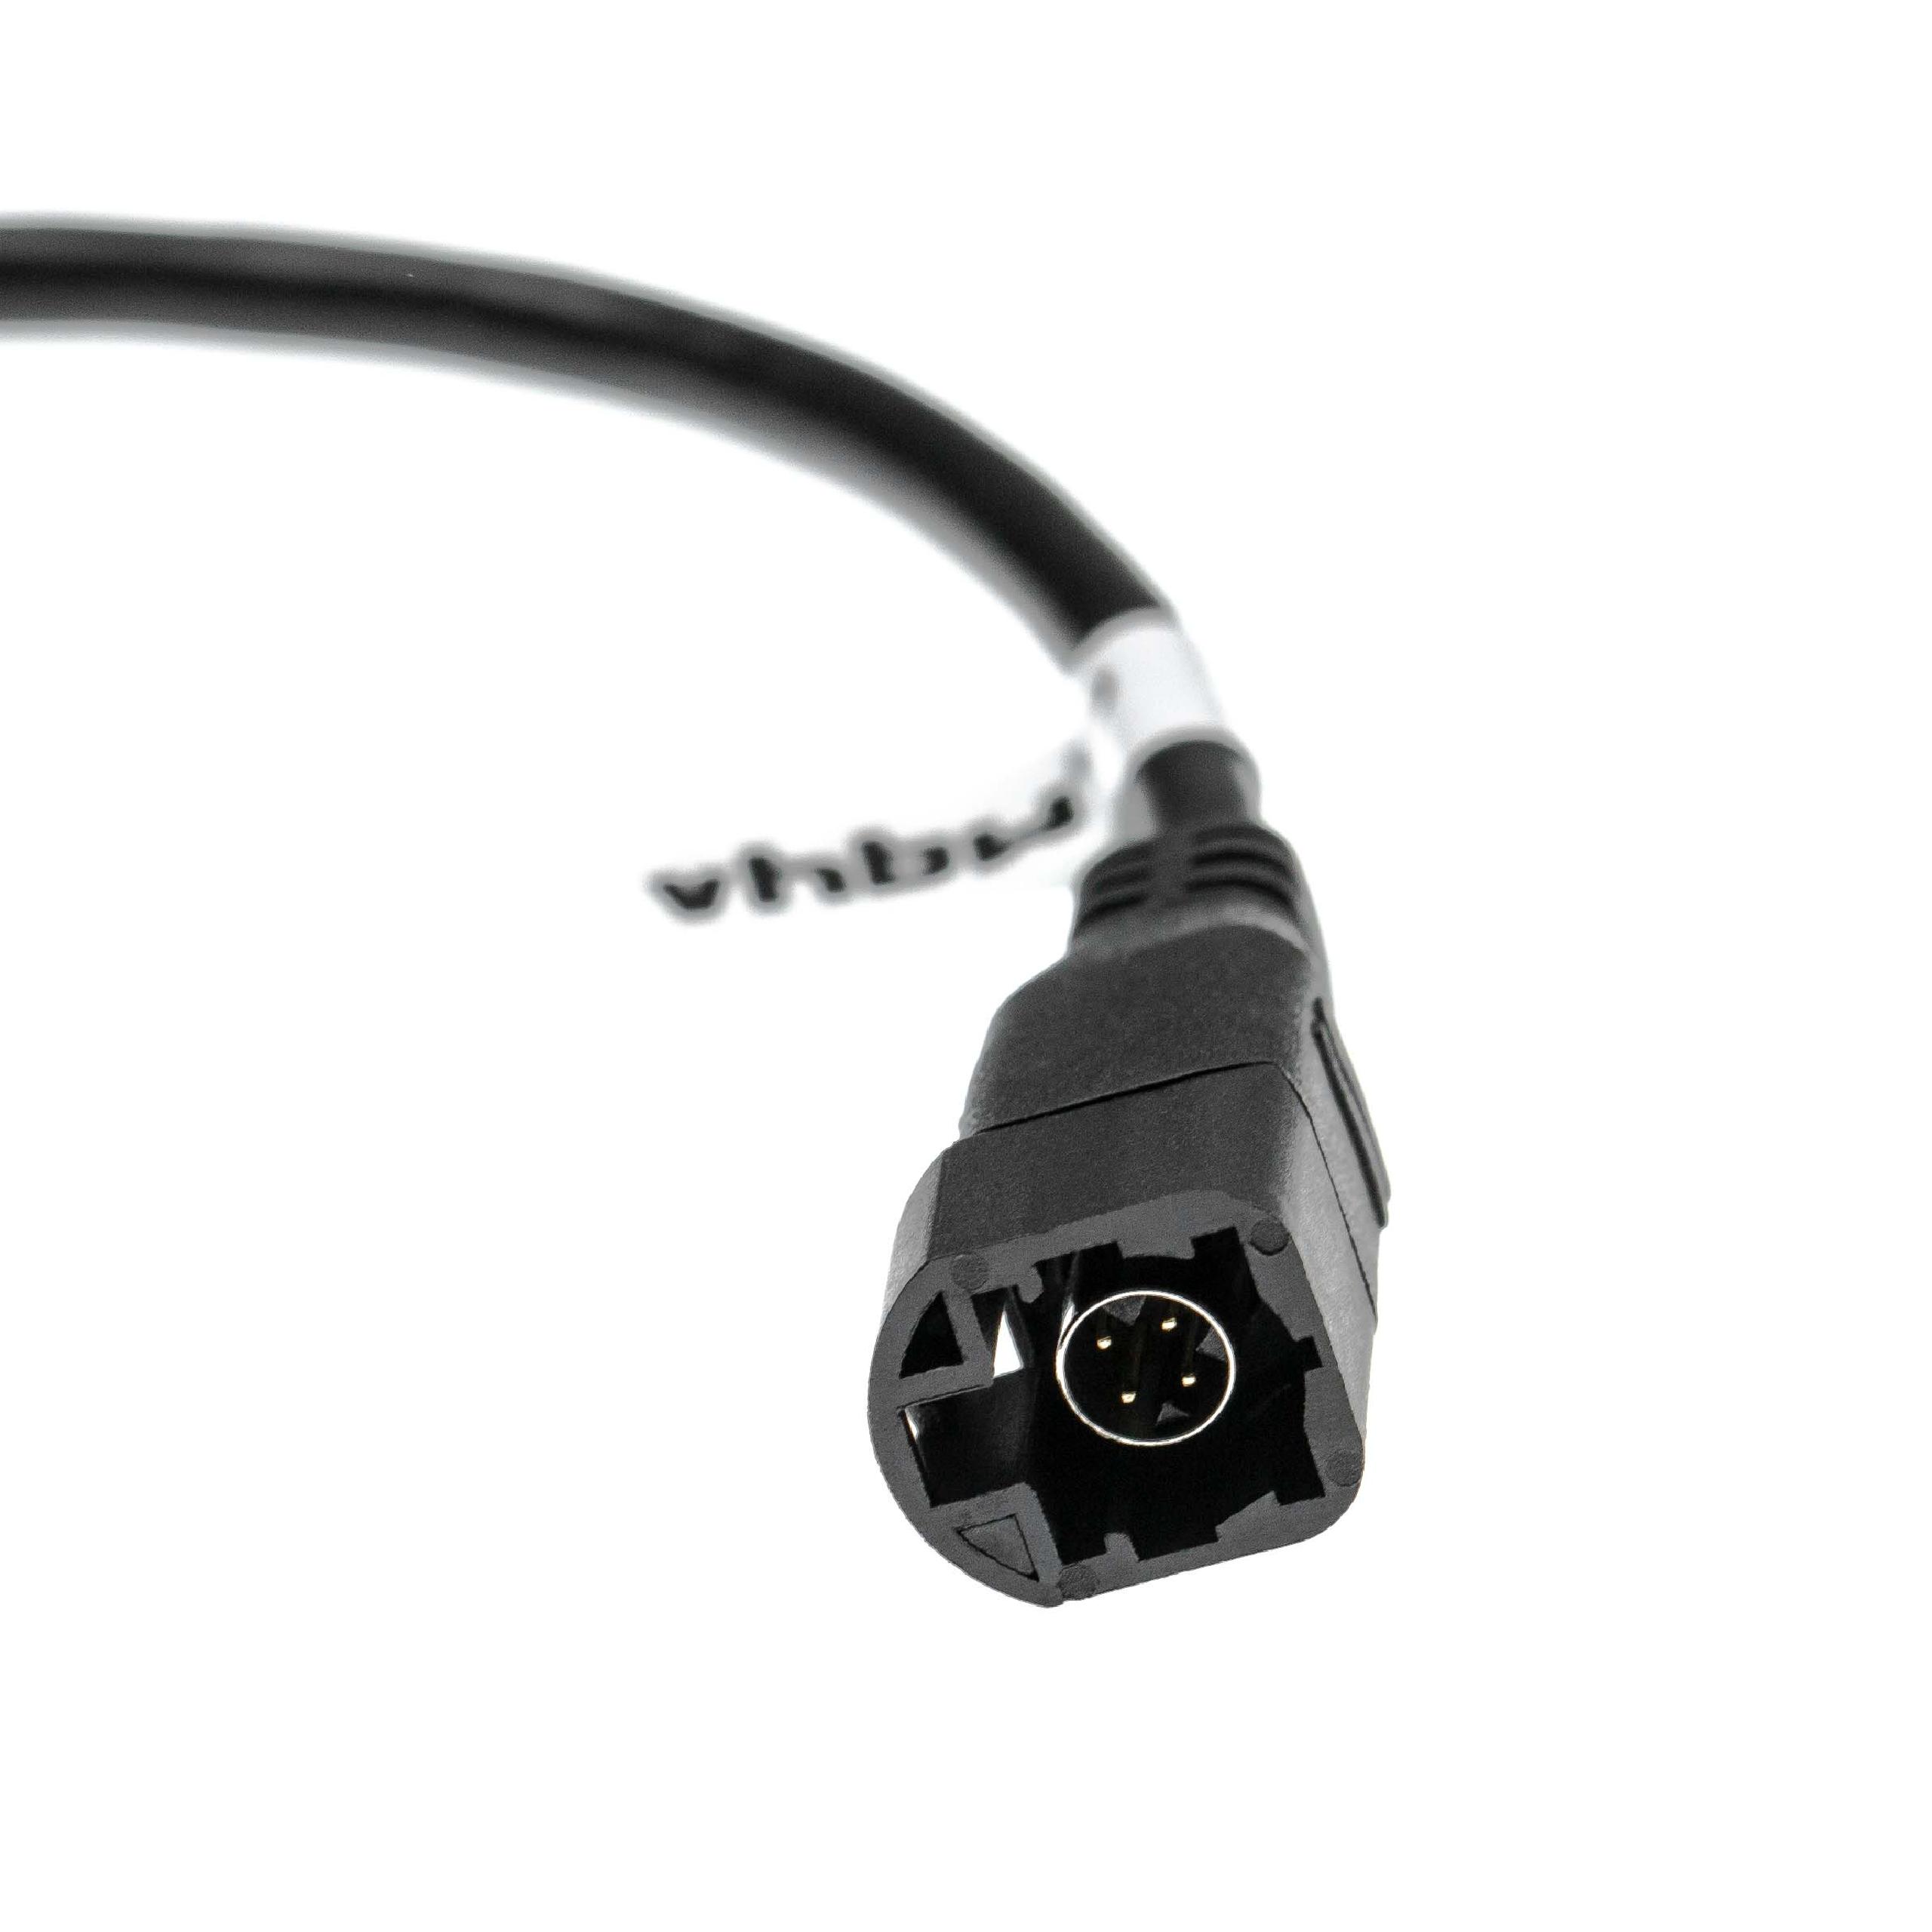 vhbw Car Audio Radio USB Retention Cable for VW Amarok (2010+) Car - 4 Pin Socket to USB A Plug 